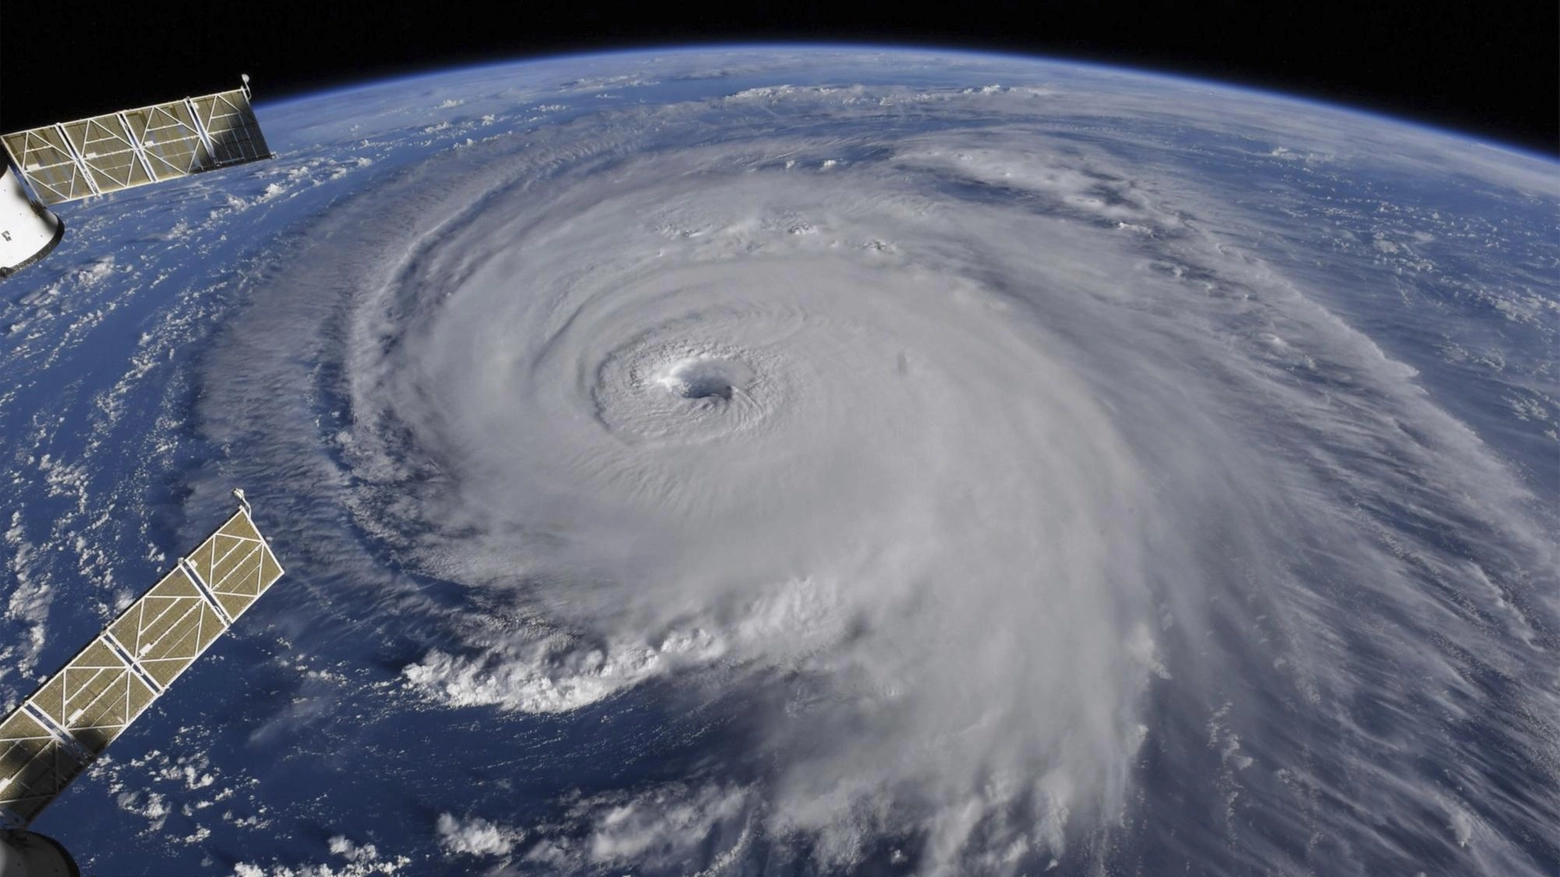 Uragano Florence nelle immagini satellitari della Nasa (Ansa)